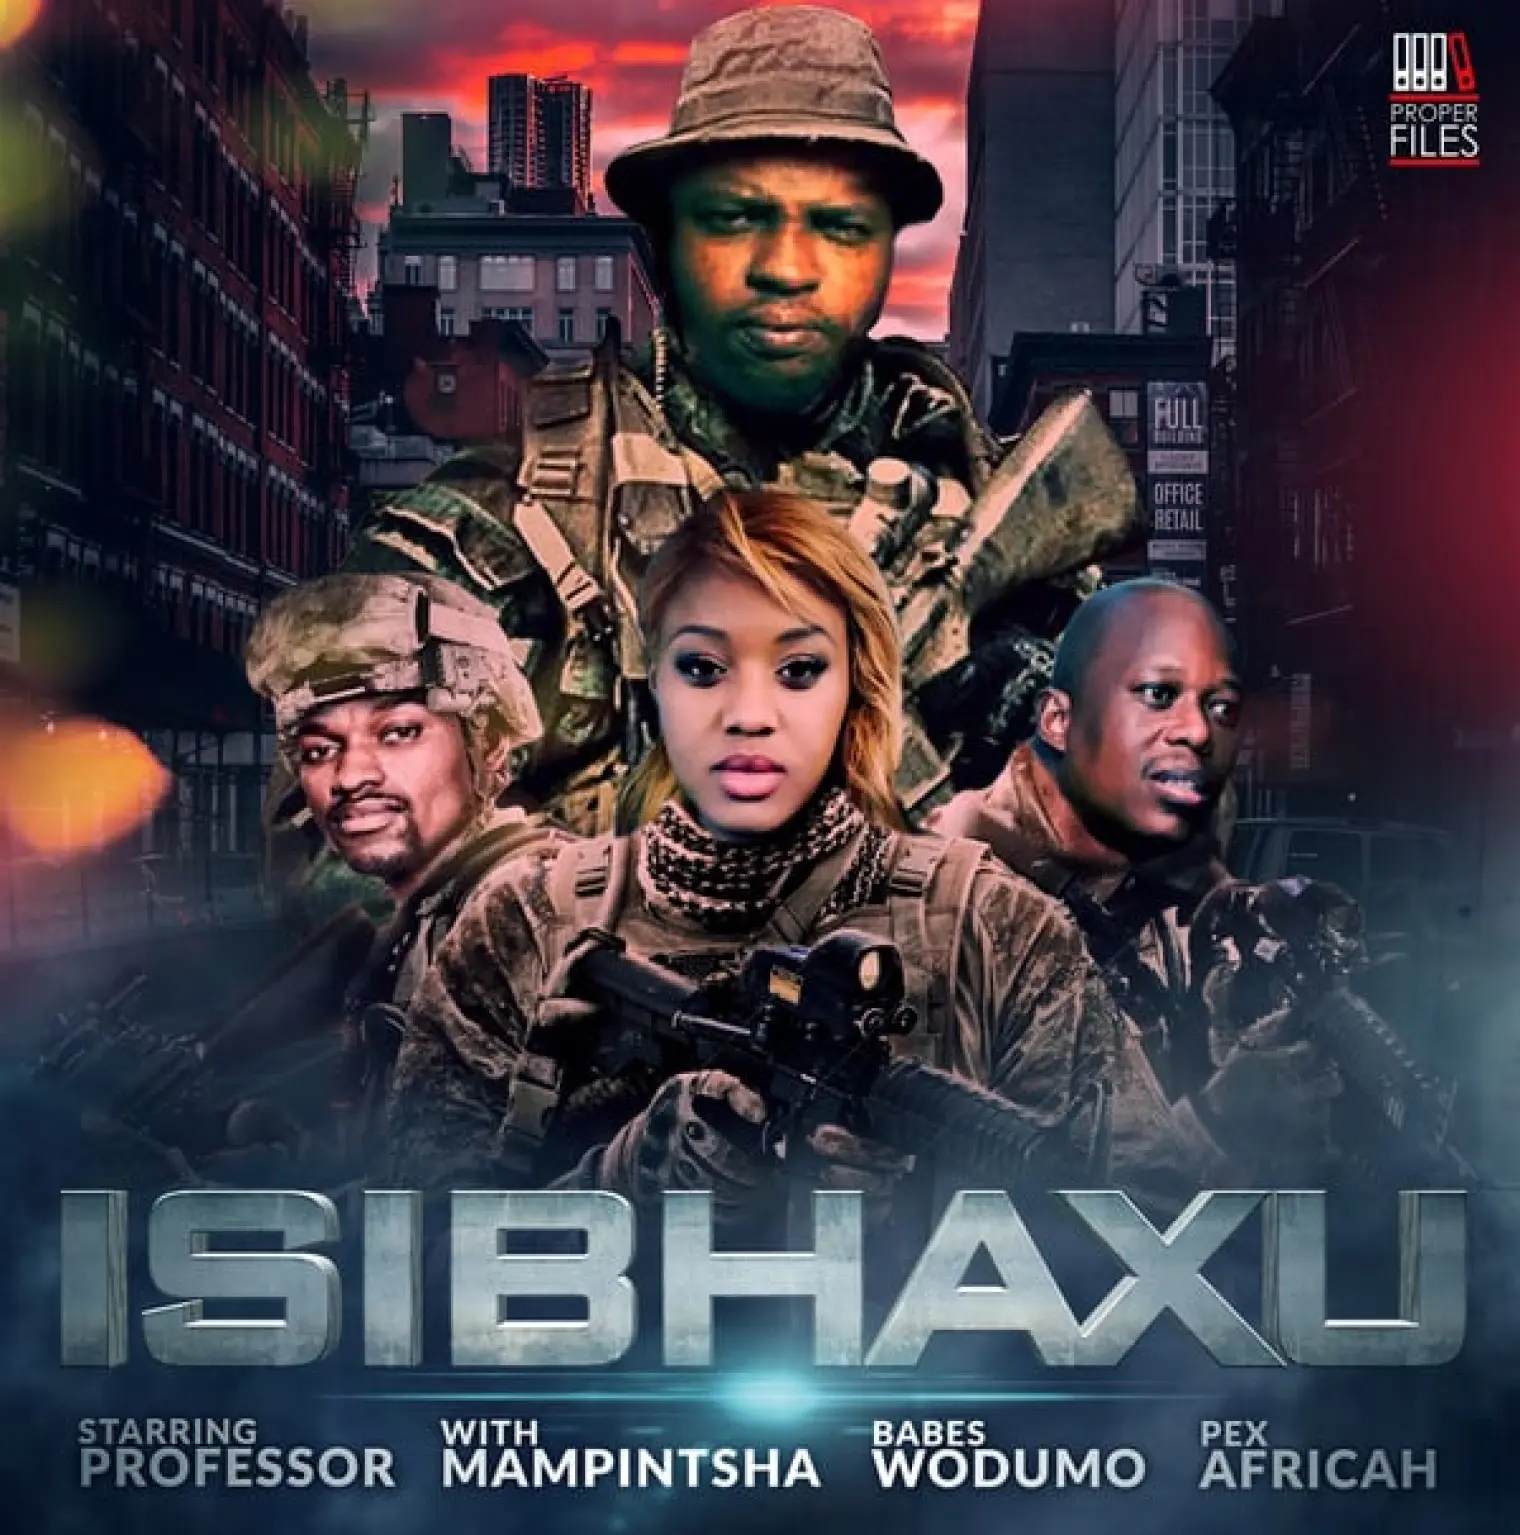 Isibhaxu (feat. Mampintsha, Babes Wodumo and Pex Africah) -  Professor 